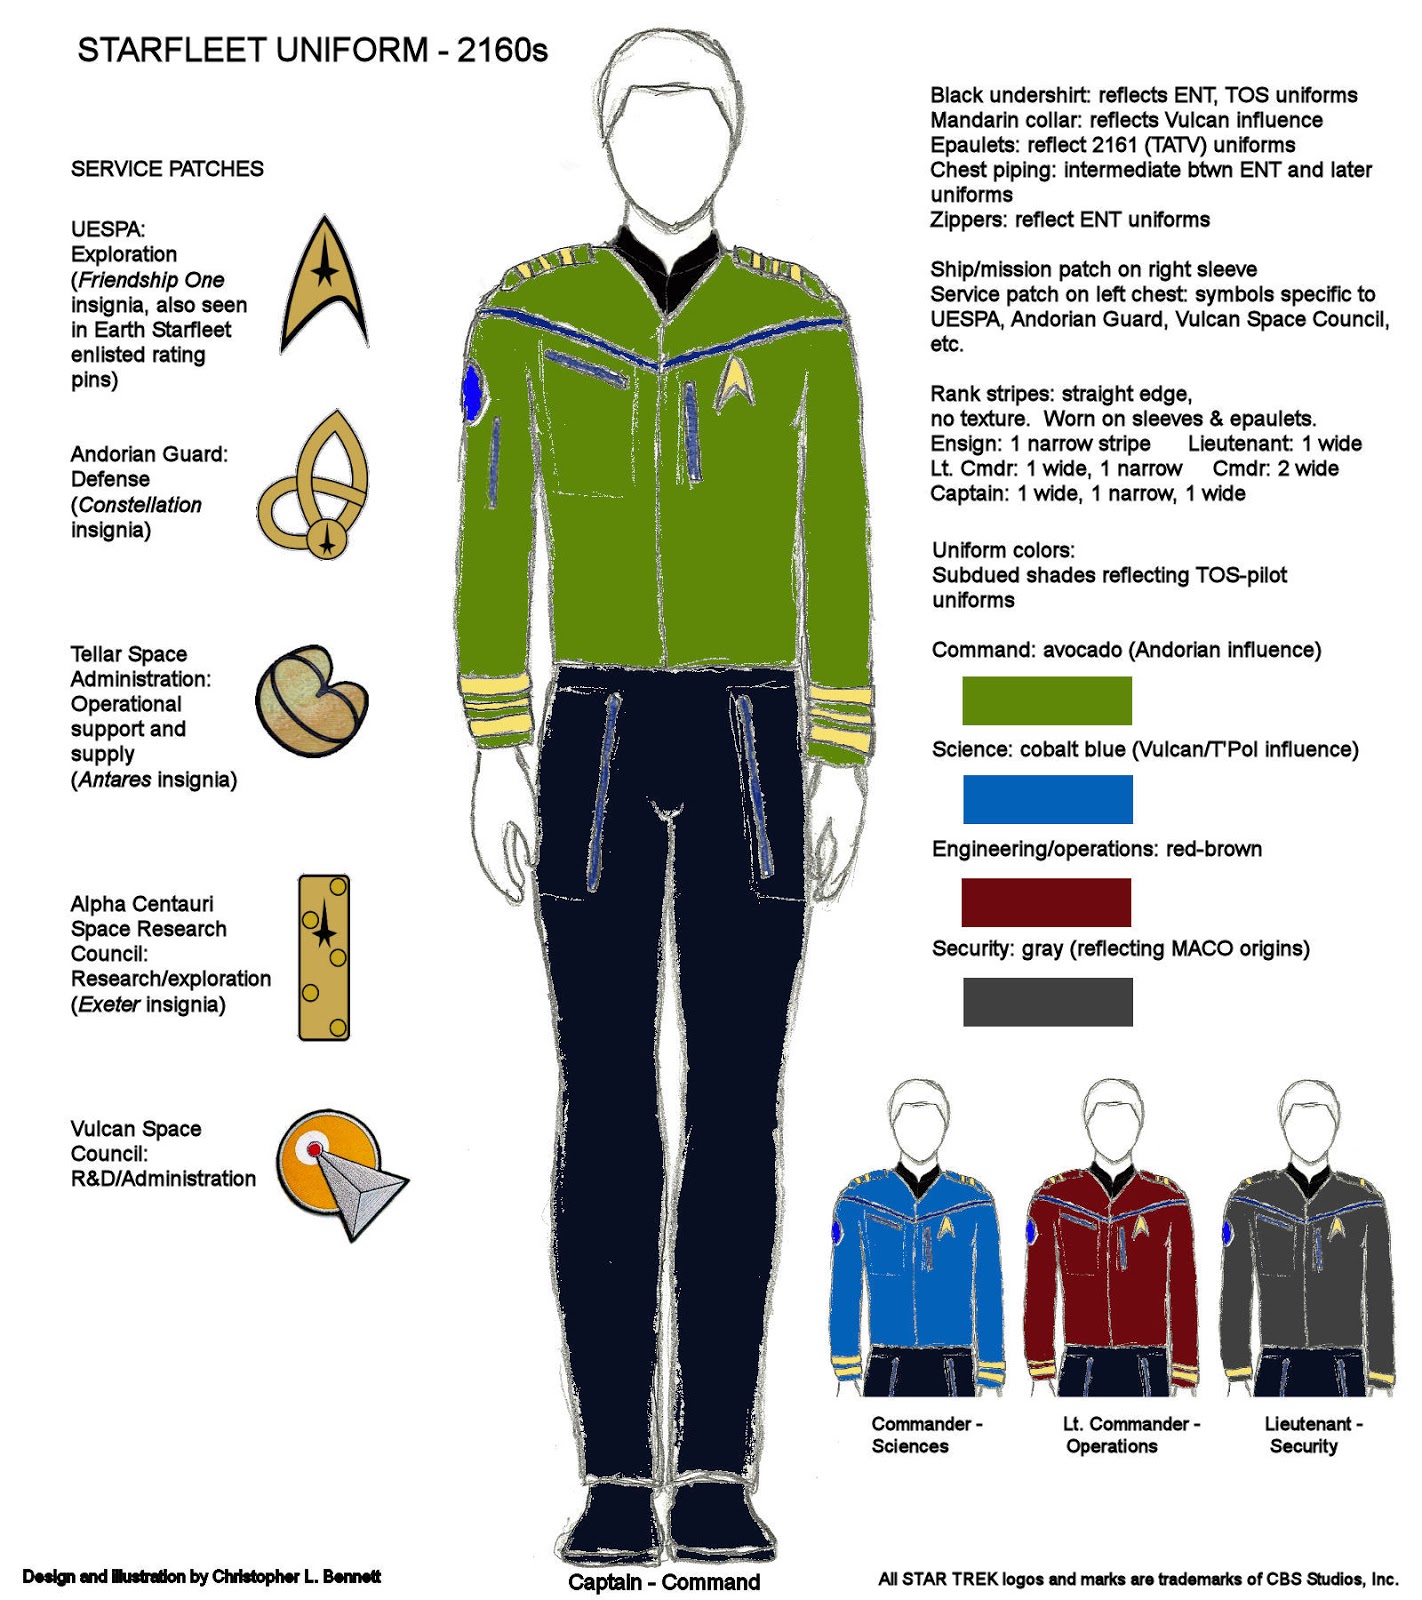 meaning of star trek uniform colors